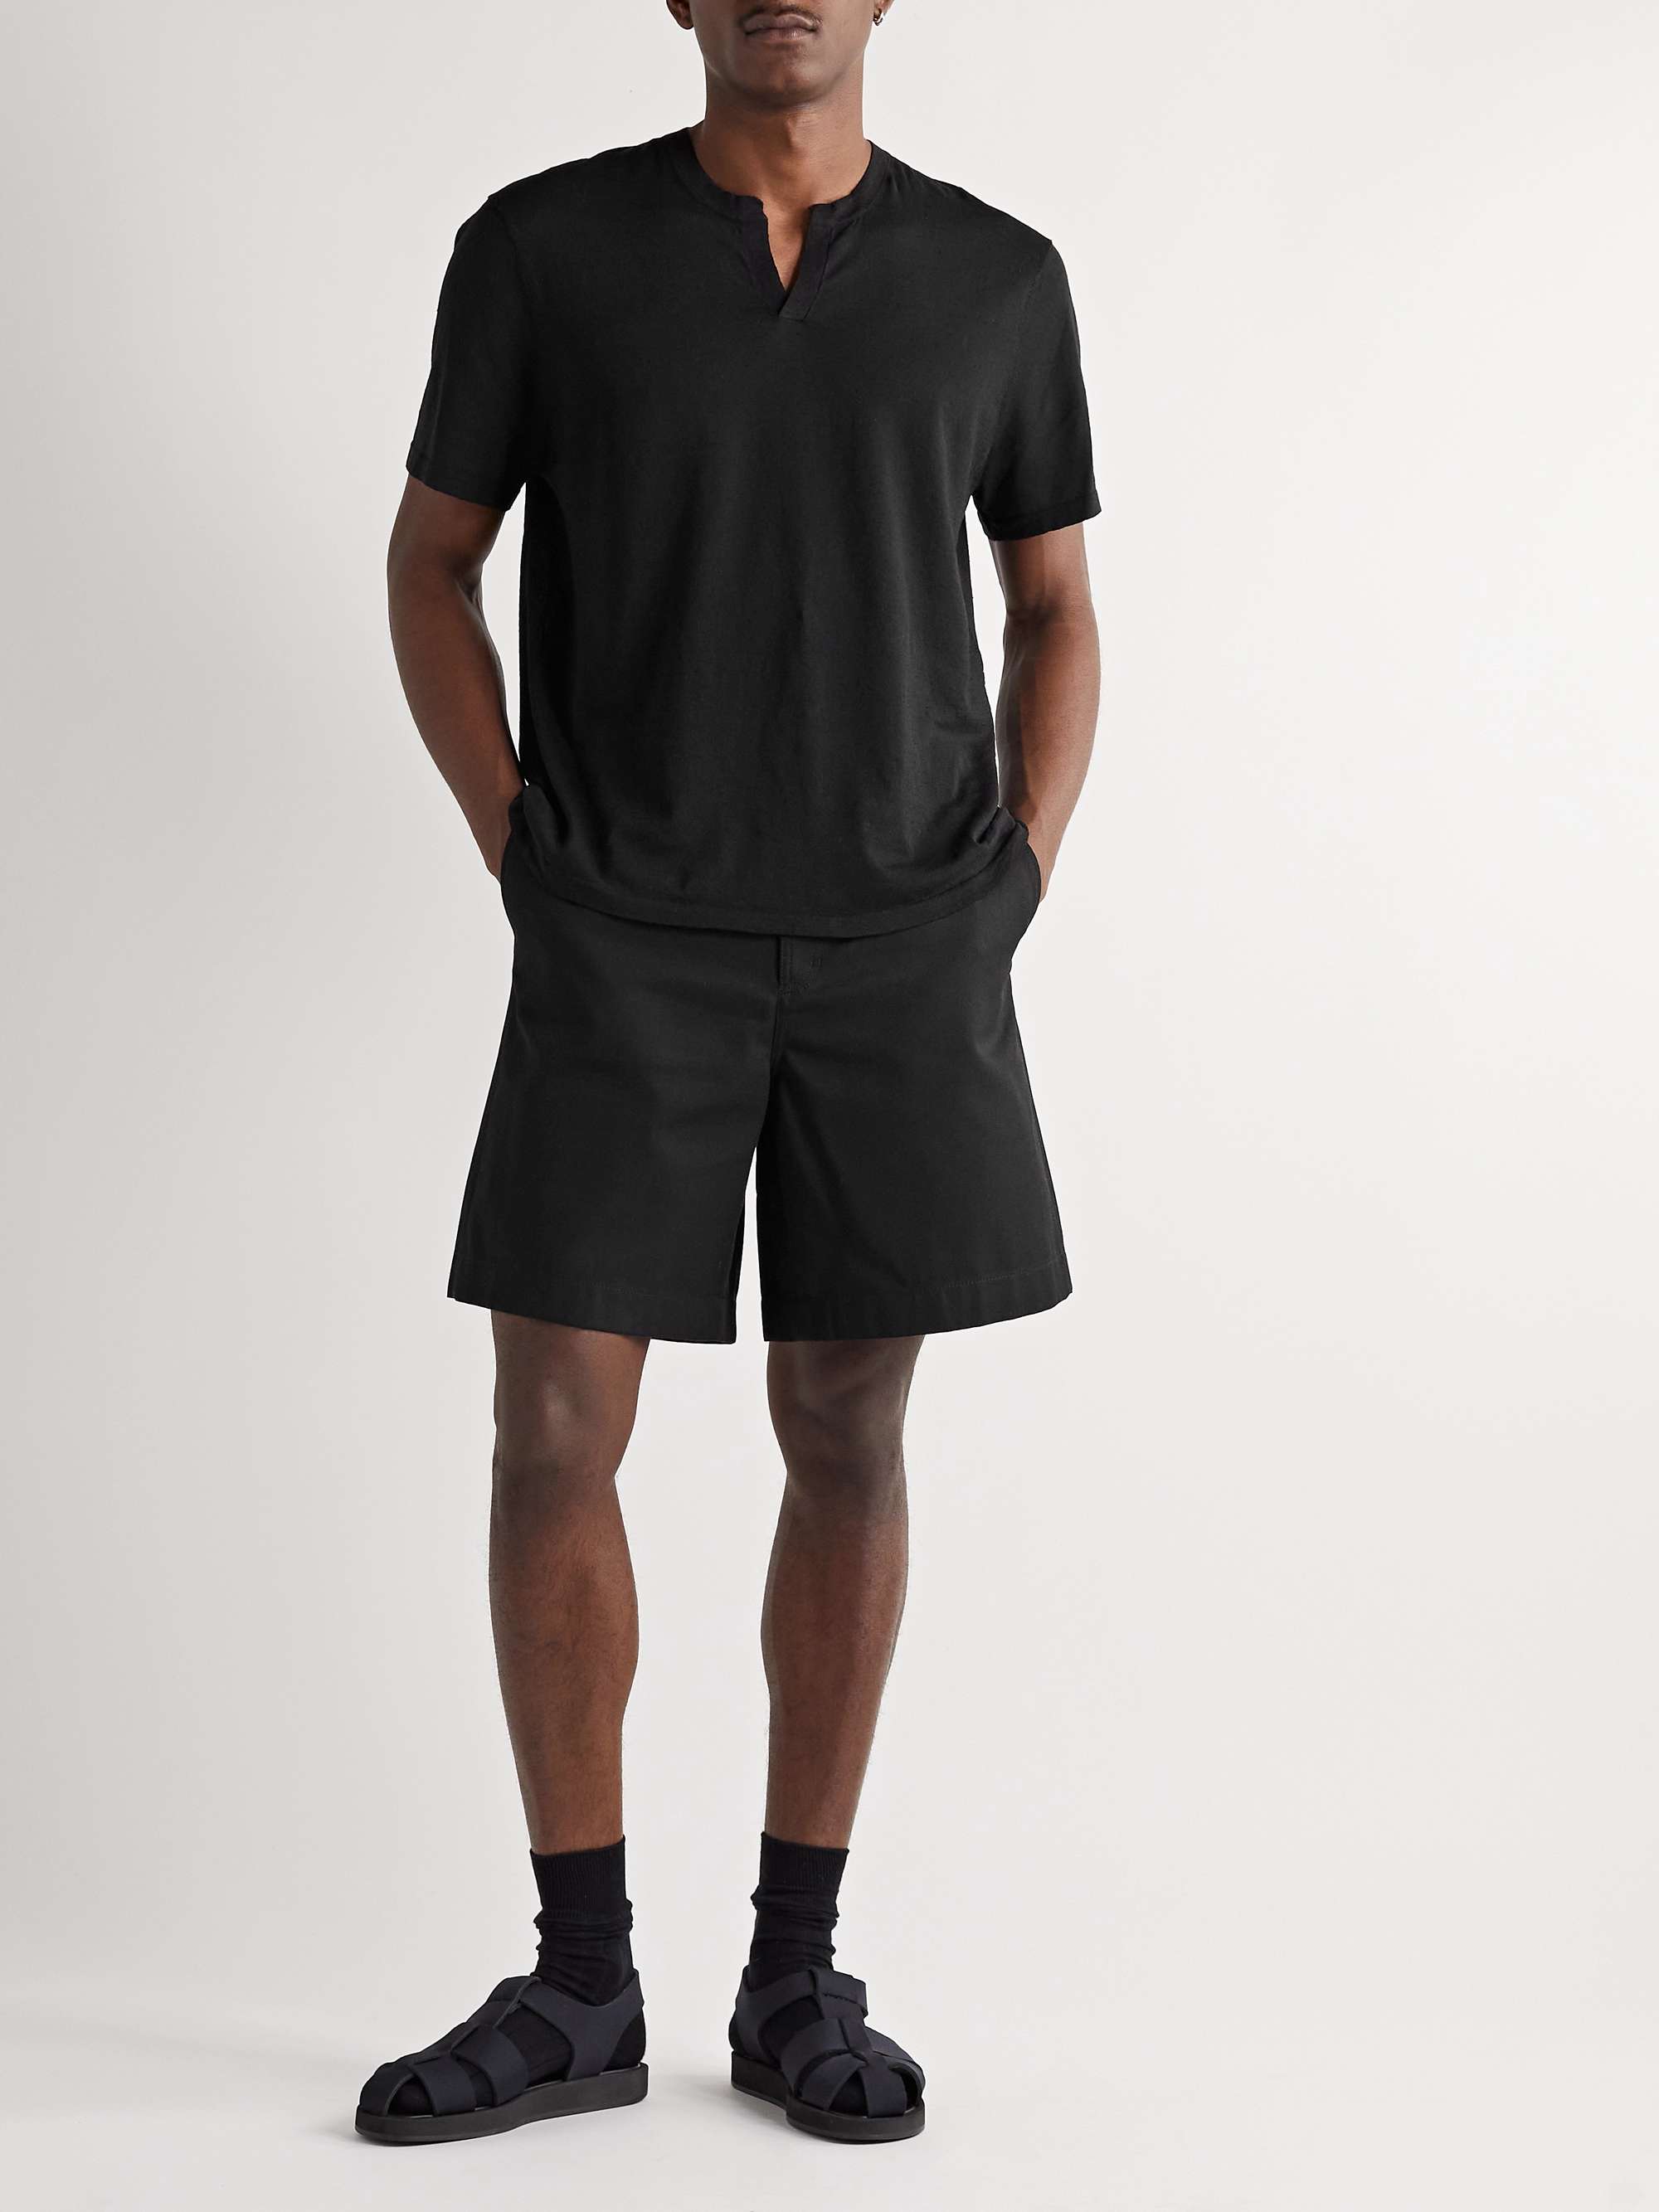 Black Linen-Blend T-Shirt | JAMES PERSE | MR PORTER